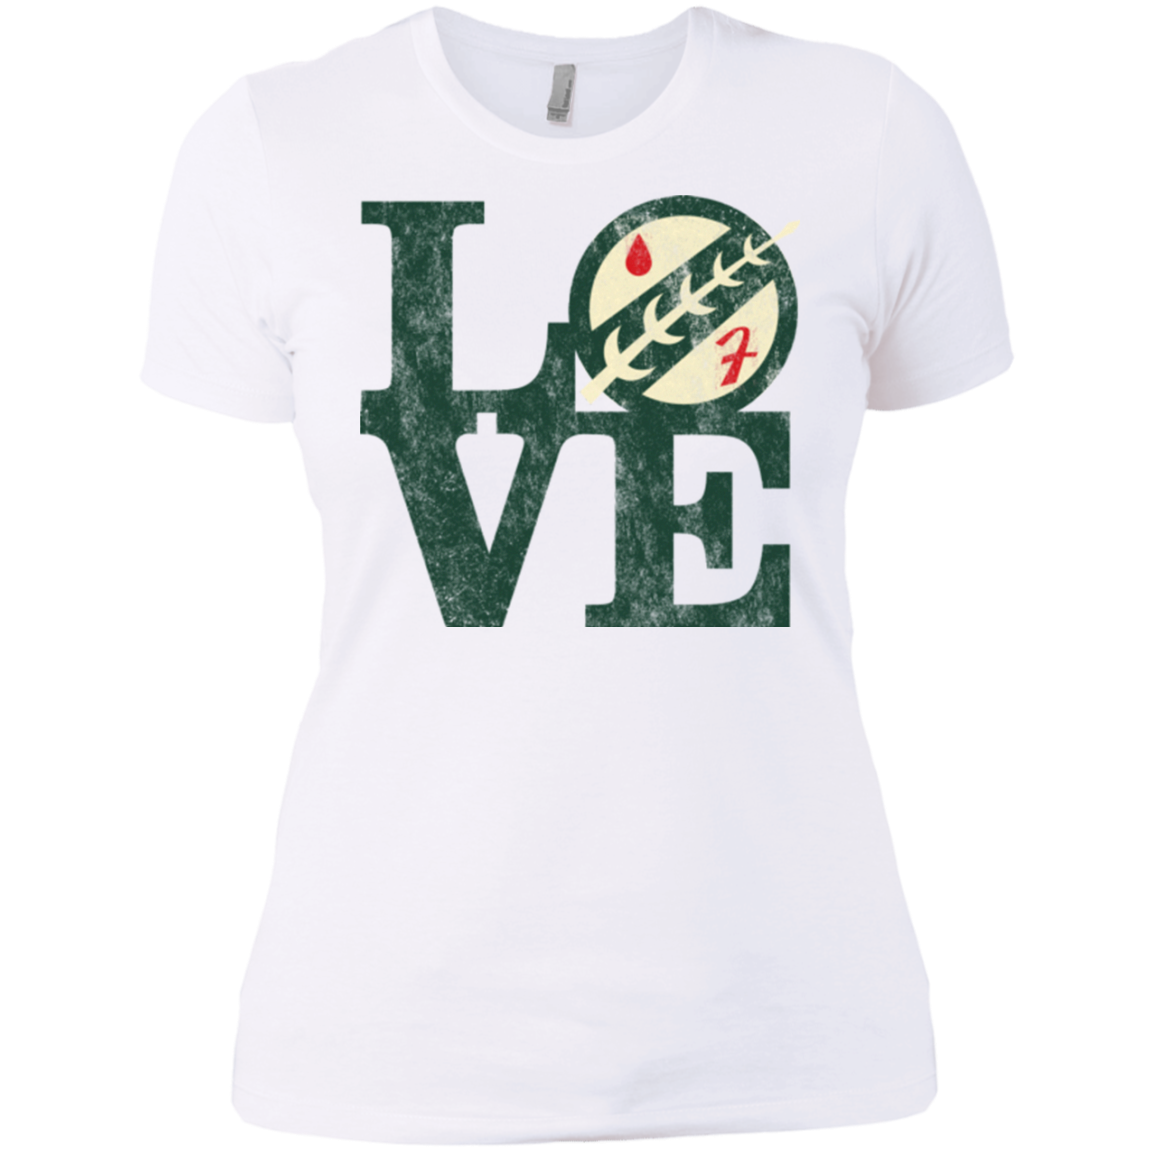 LOVE Boba Women's Premium T-Shirt